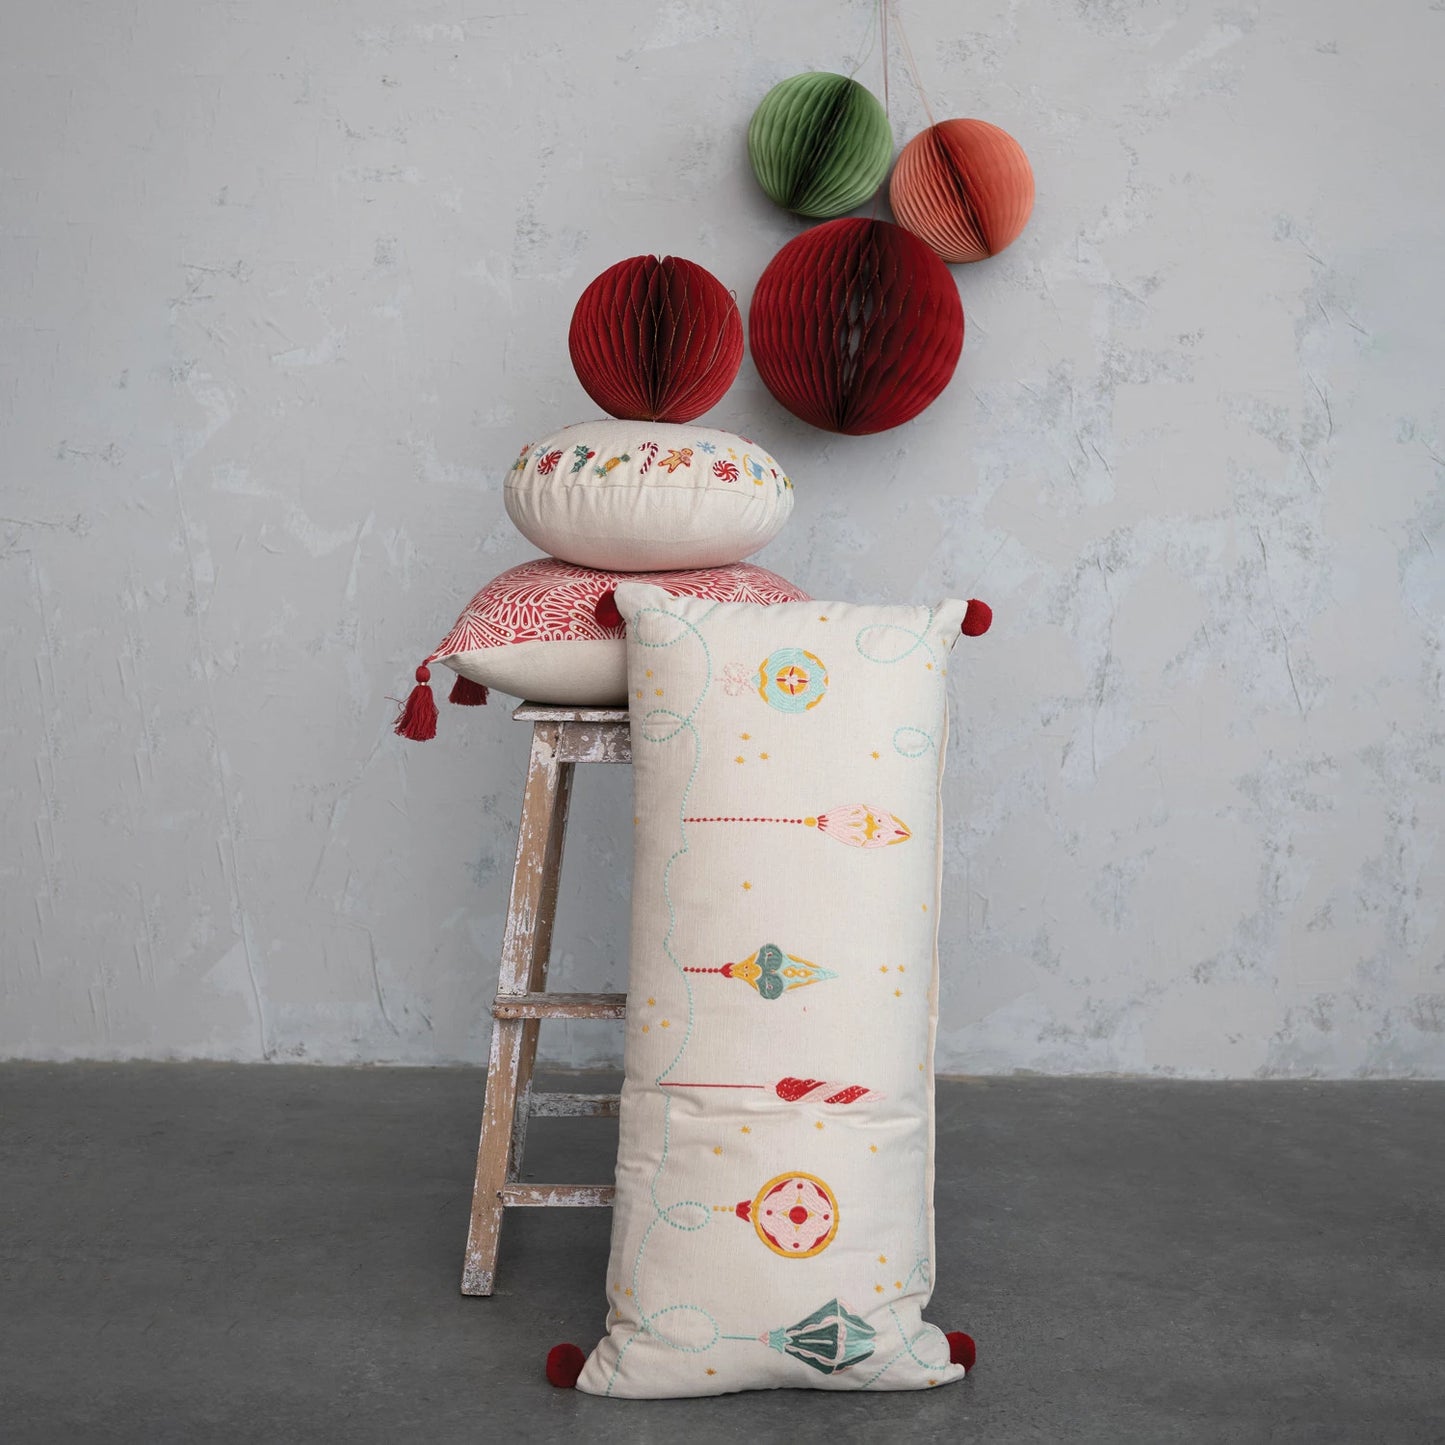 Cotton Slub Printed Lumbar Pillow w/ Ornaments, Embroidery & Pom Poms, Multi Color